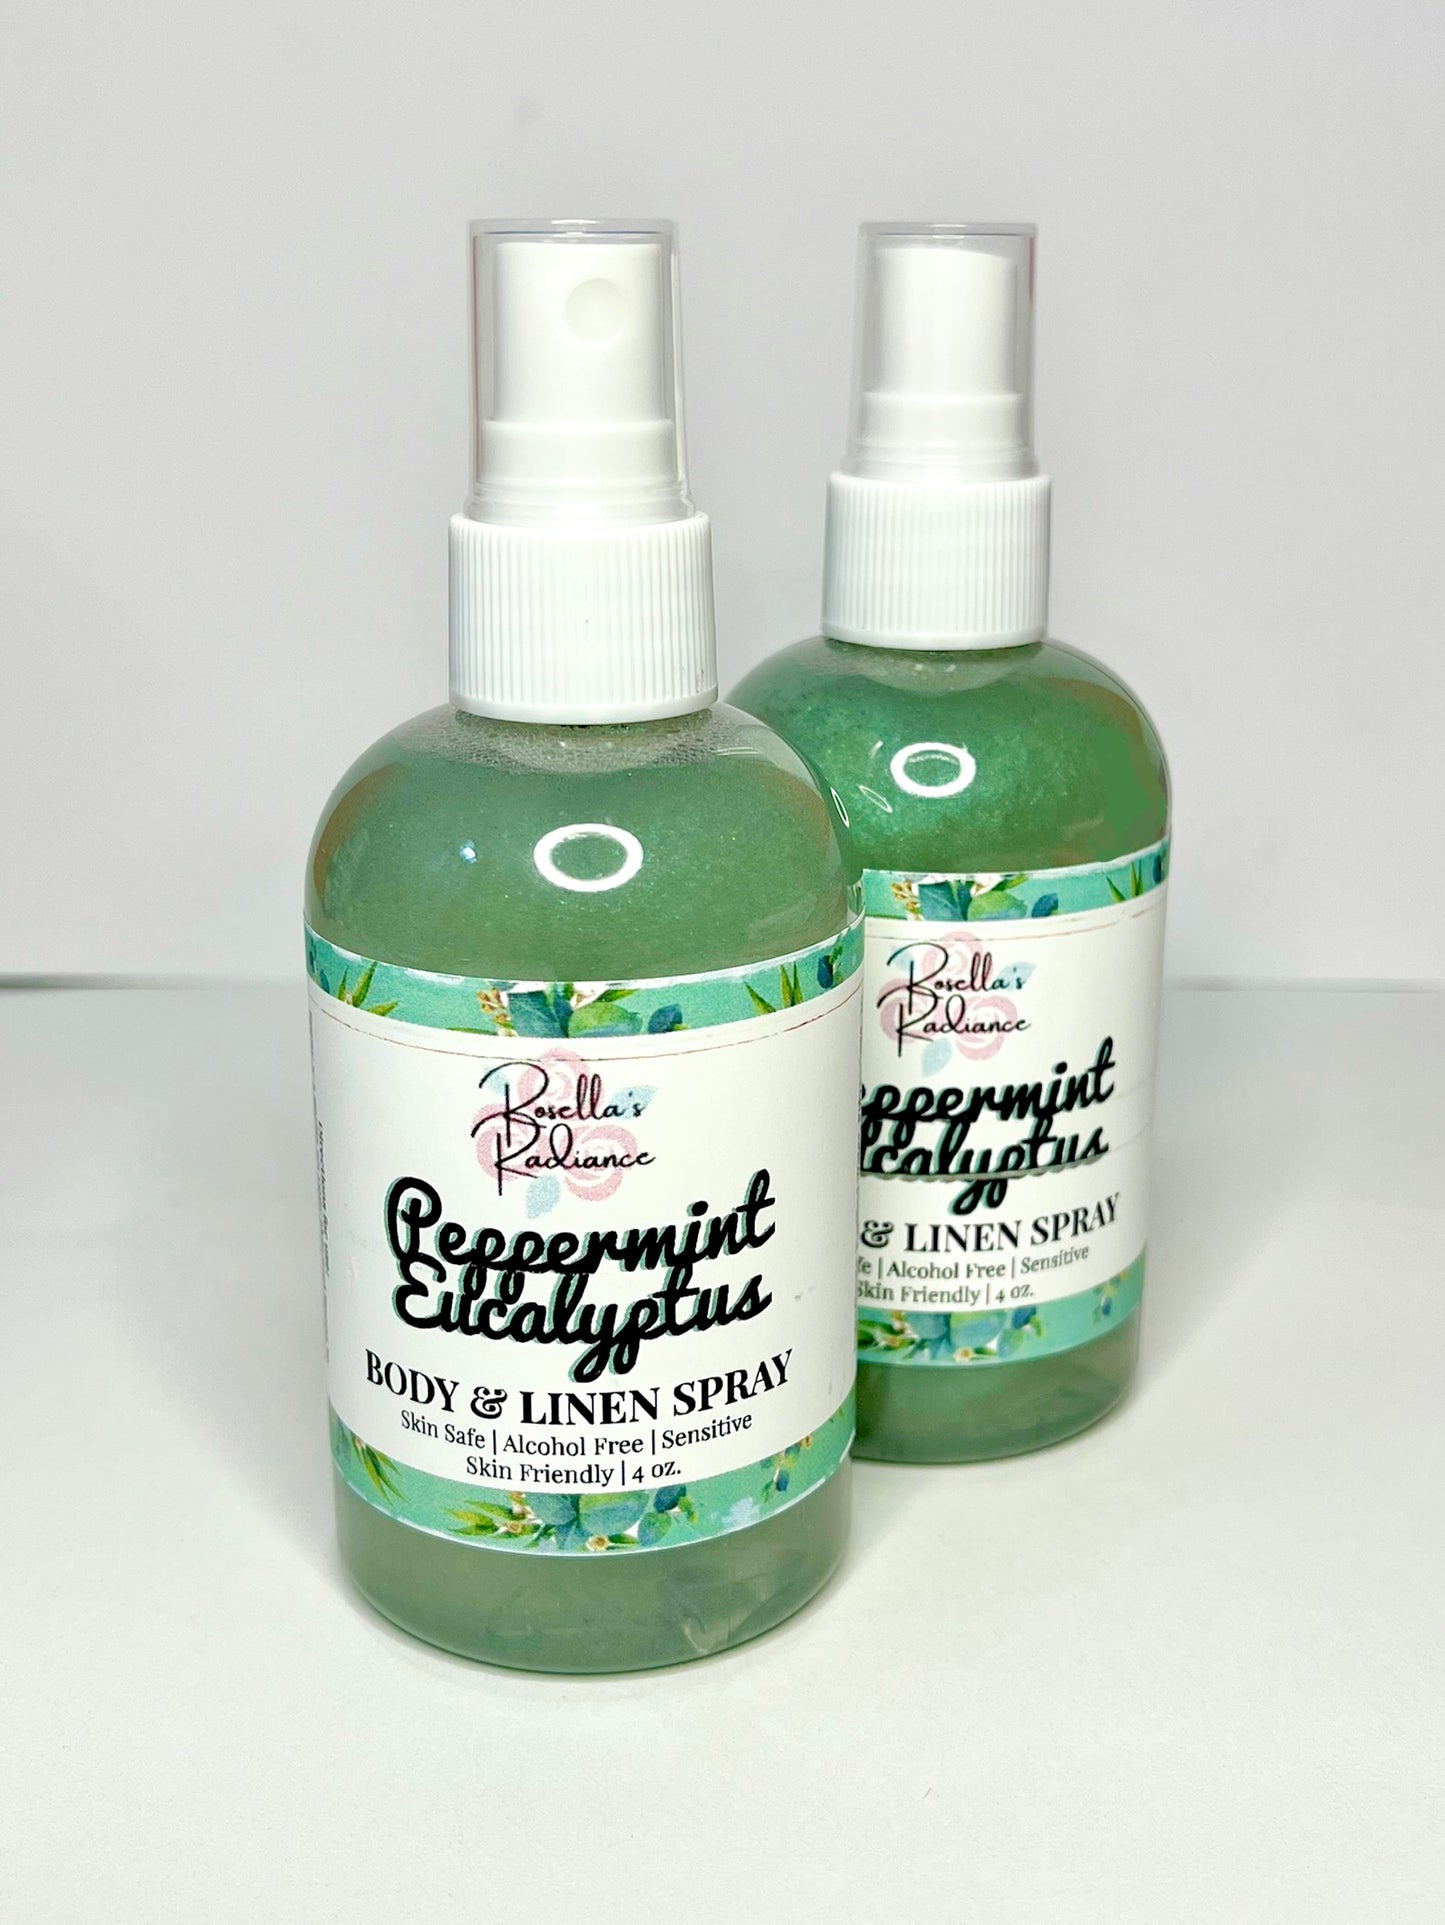 Peppermint Eucalyptus Body & Linen Spray